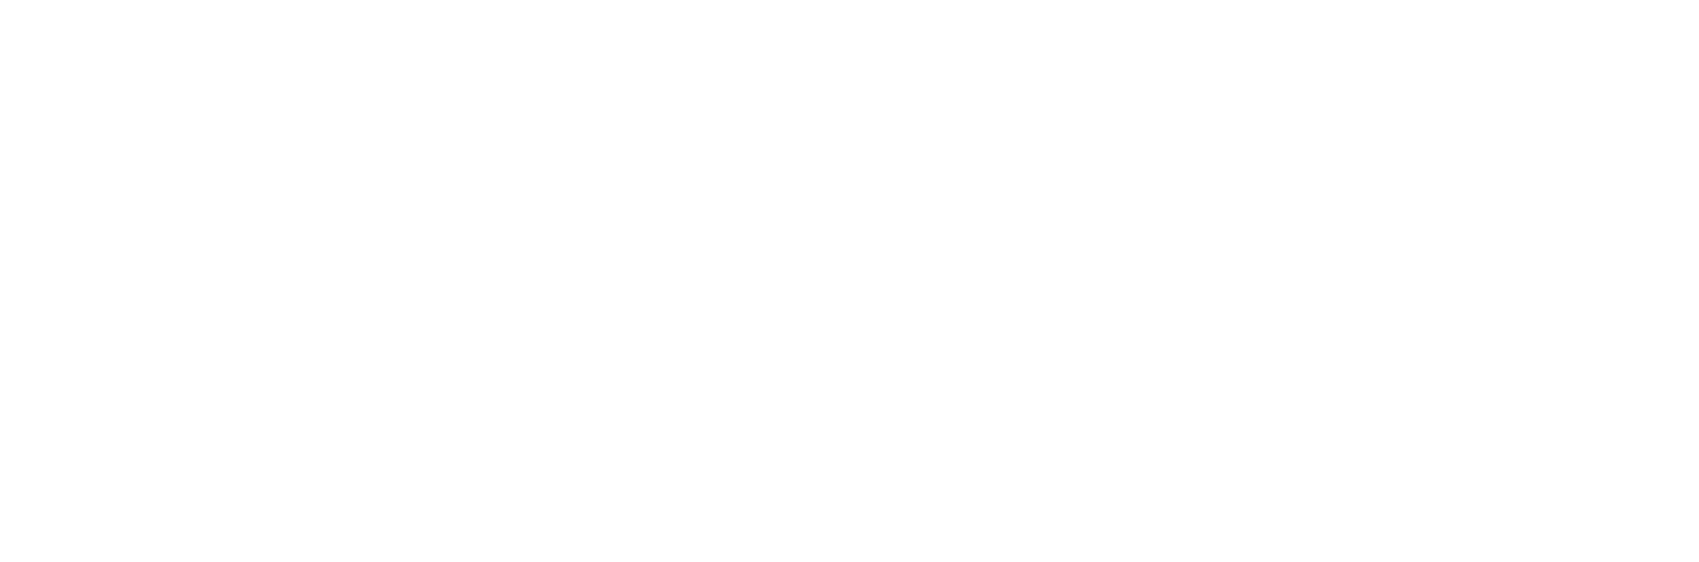 Prime Property Lending